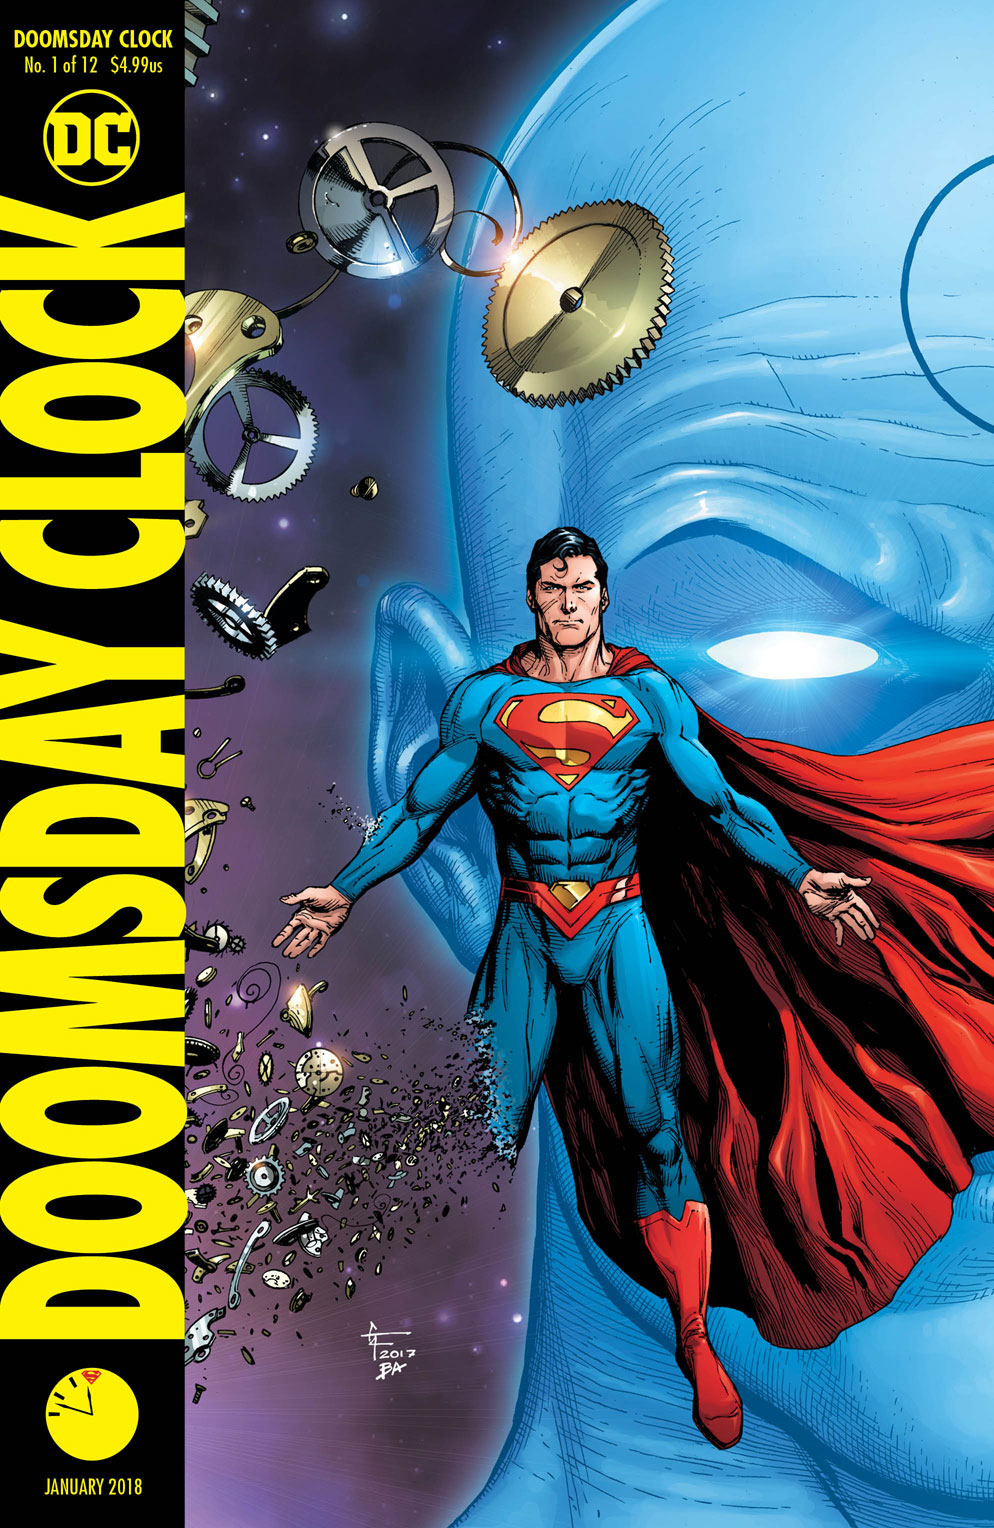 Doomsday Clock Variant 1 - DC Comics News